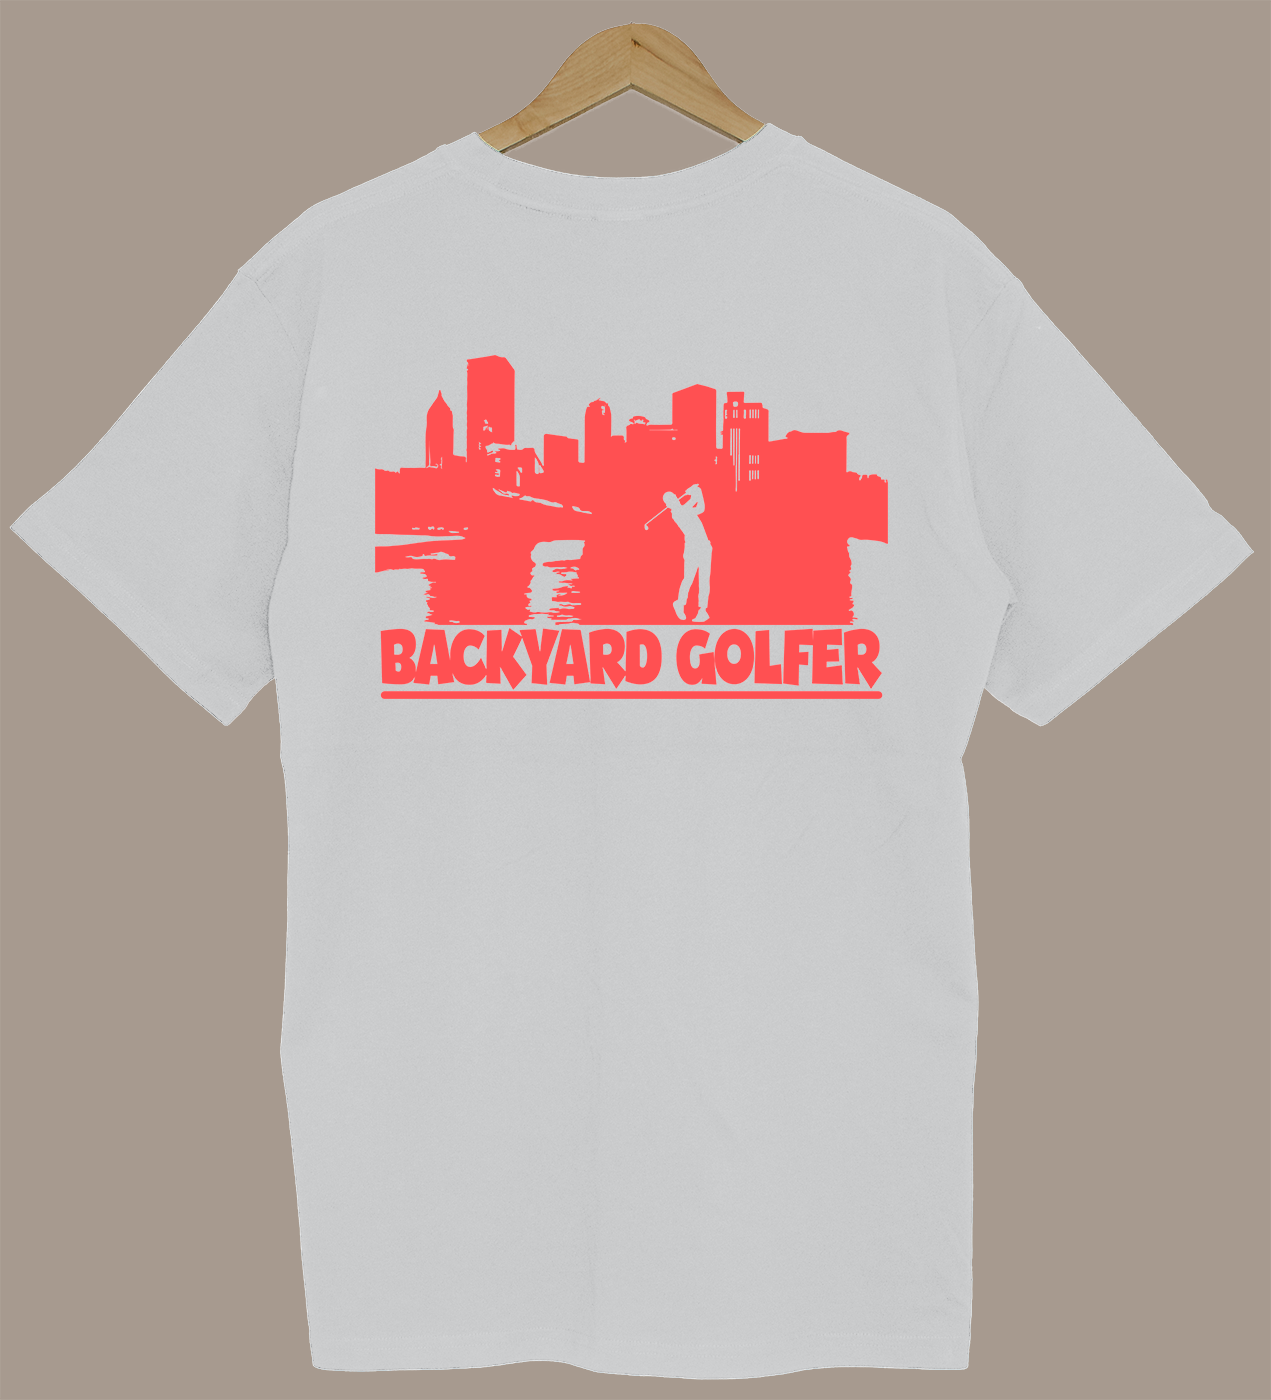 Backyard Golfer - White/Red